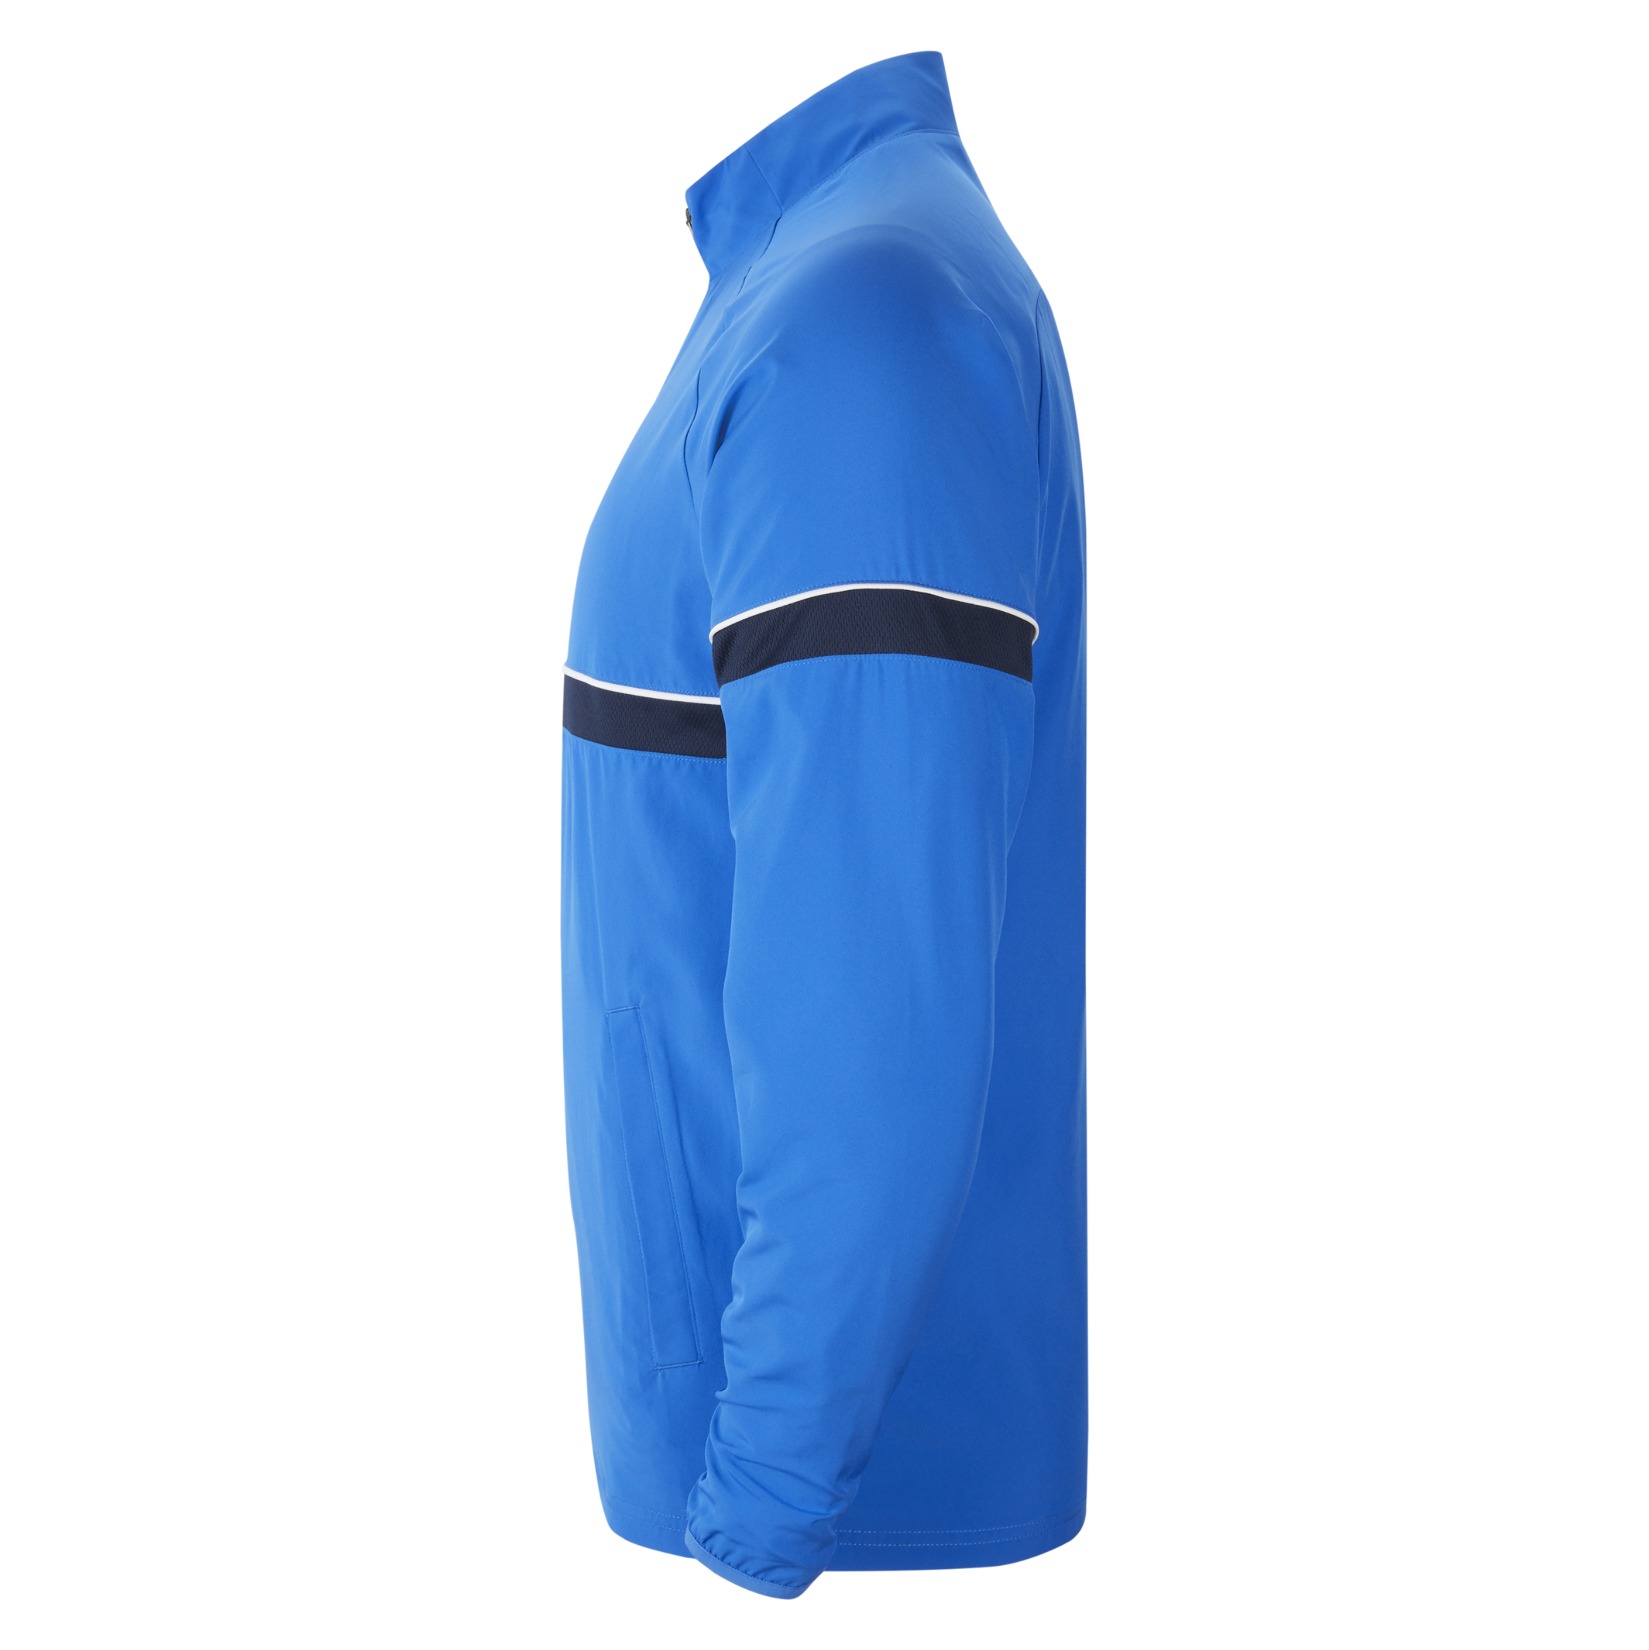 Nike Academy 21 Woven Track Jacket (M) Royal Blue-White-Obsidian-White